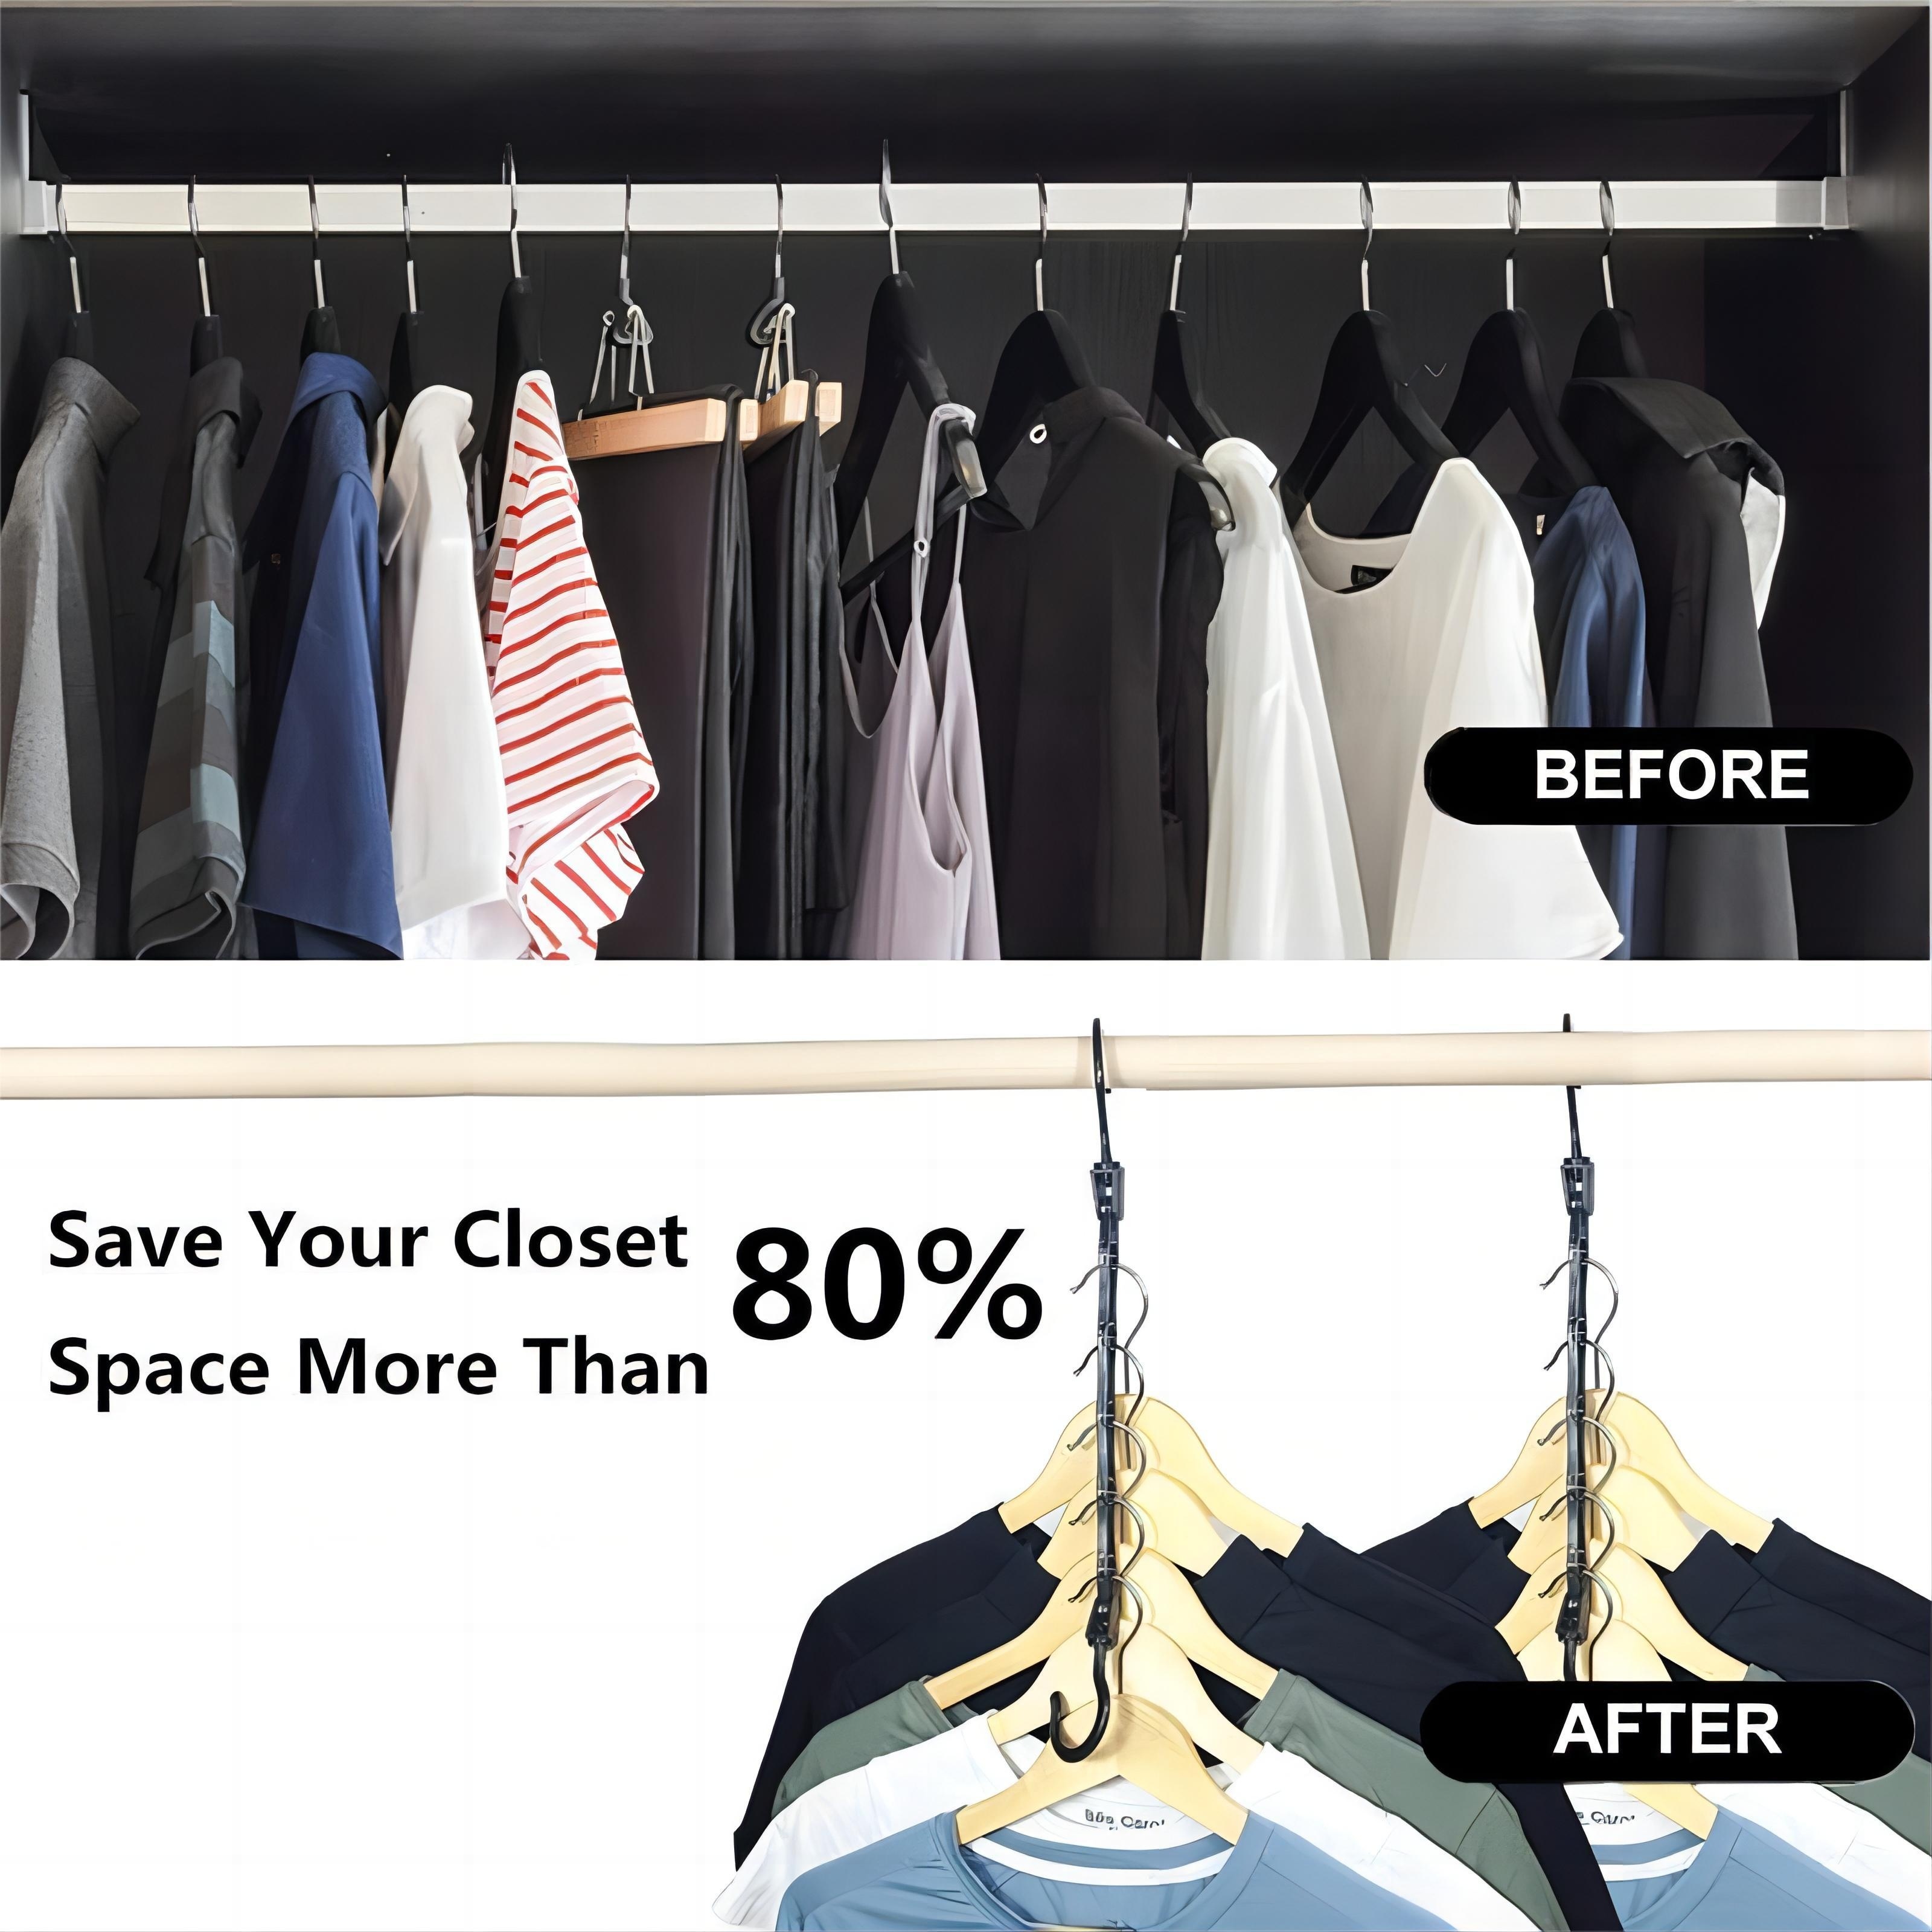 6pcs Magic Clothes Hangers, Space Saving Hangers